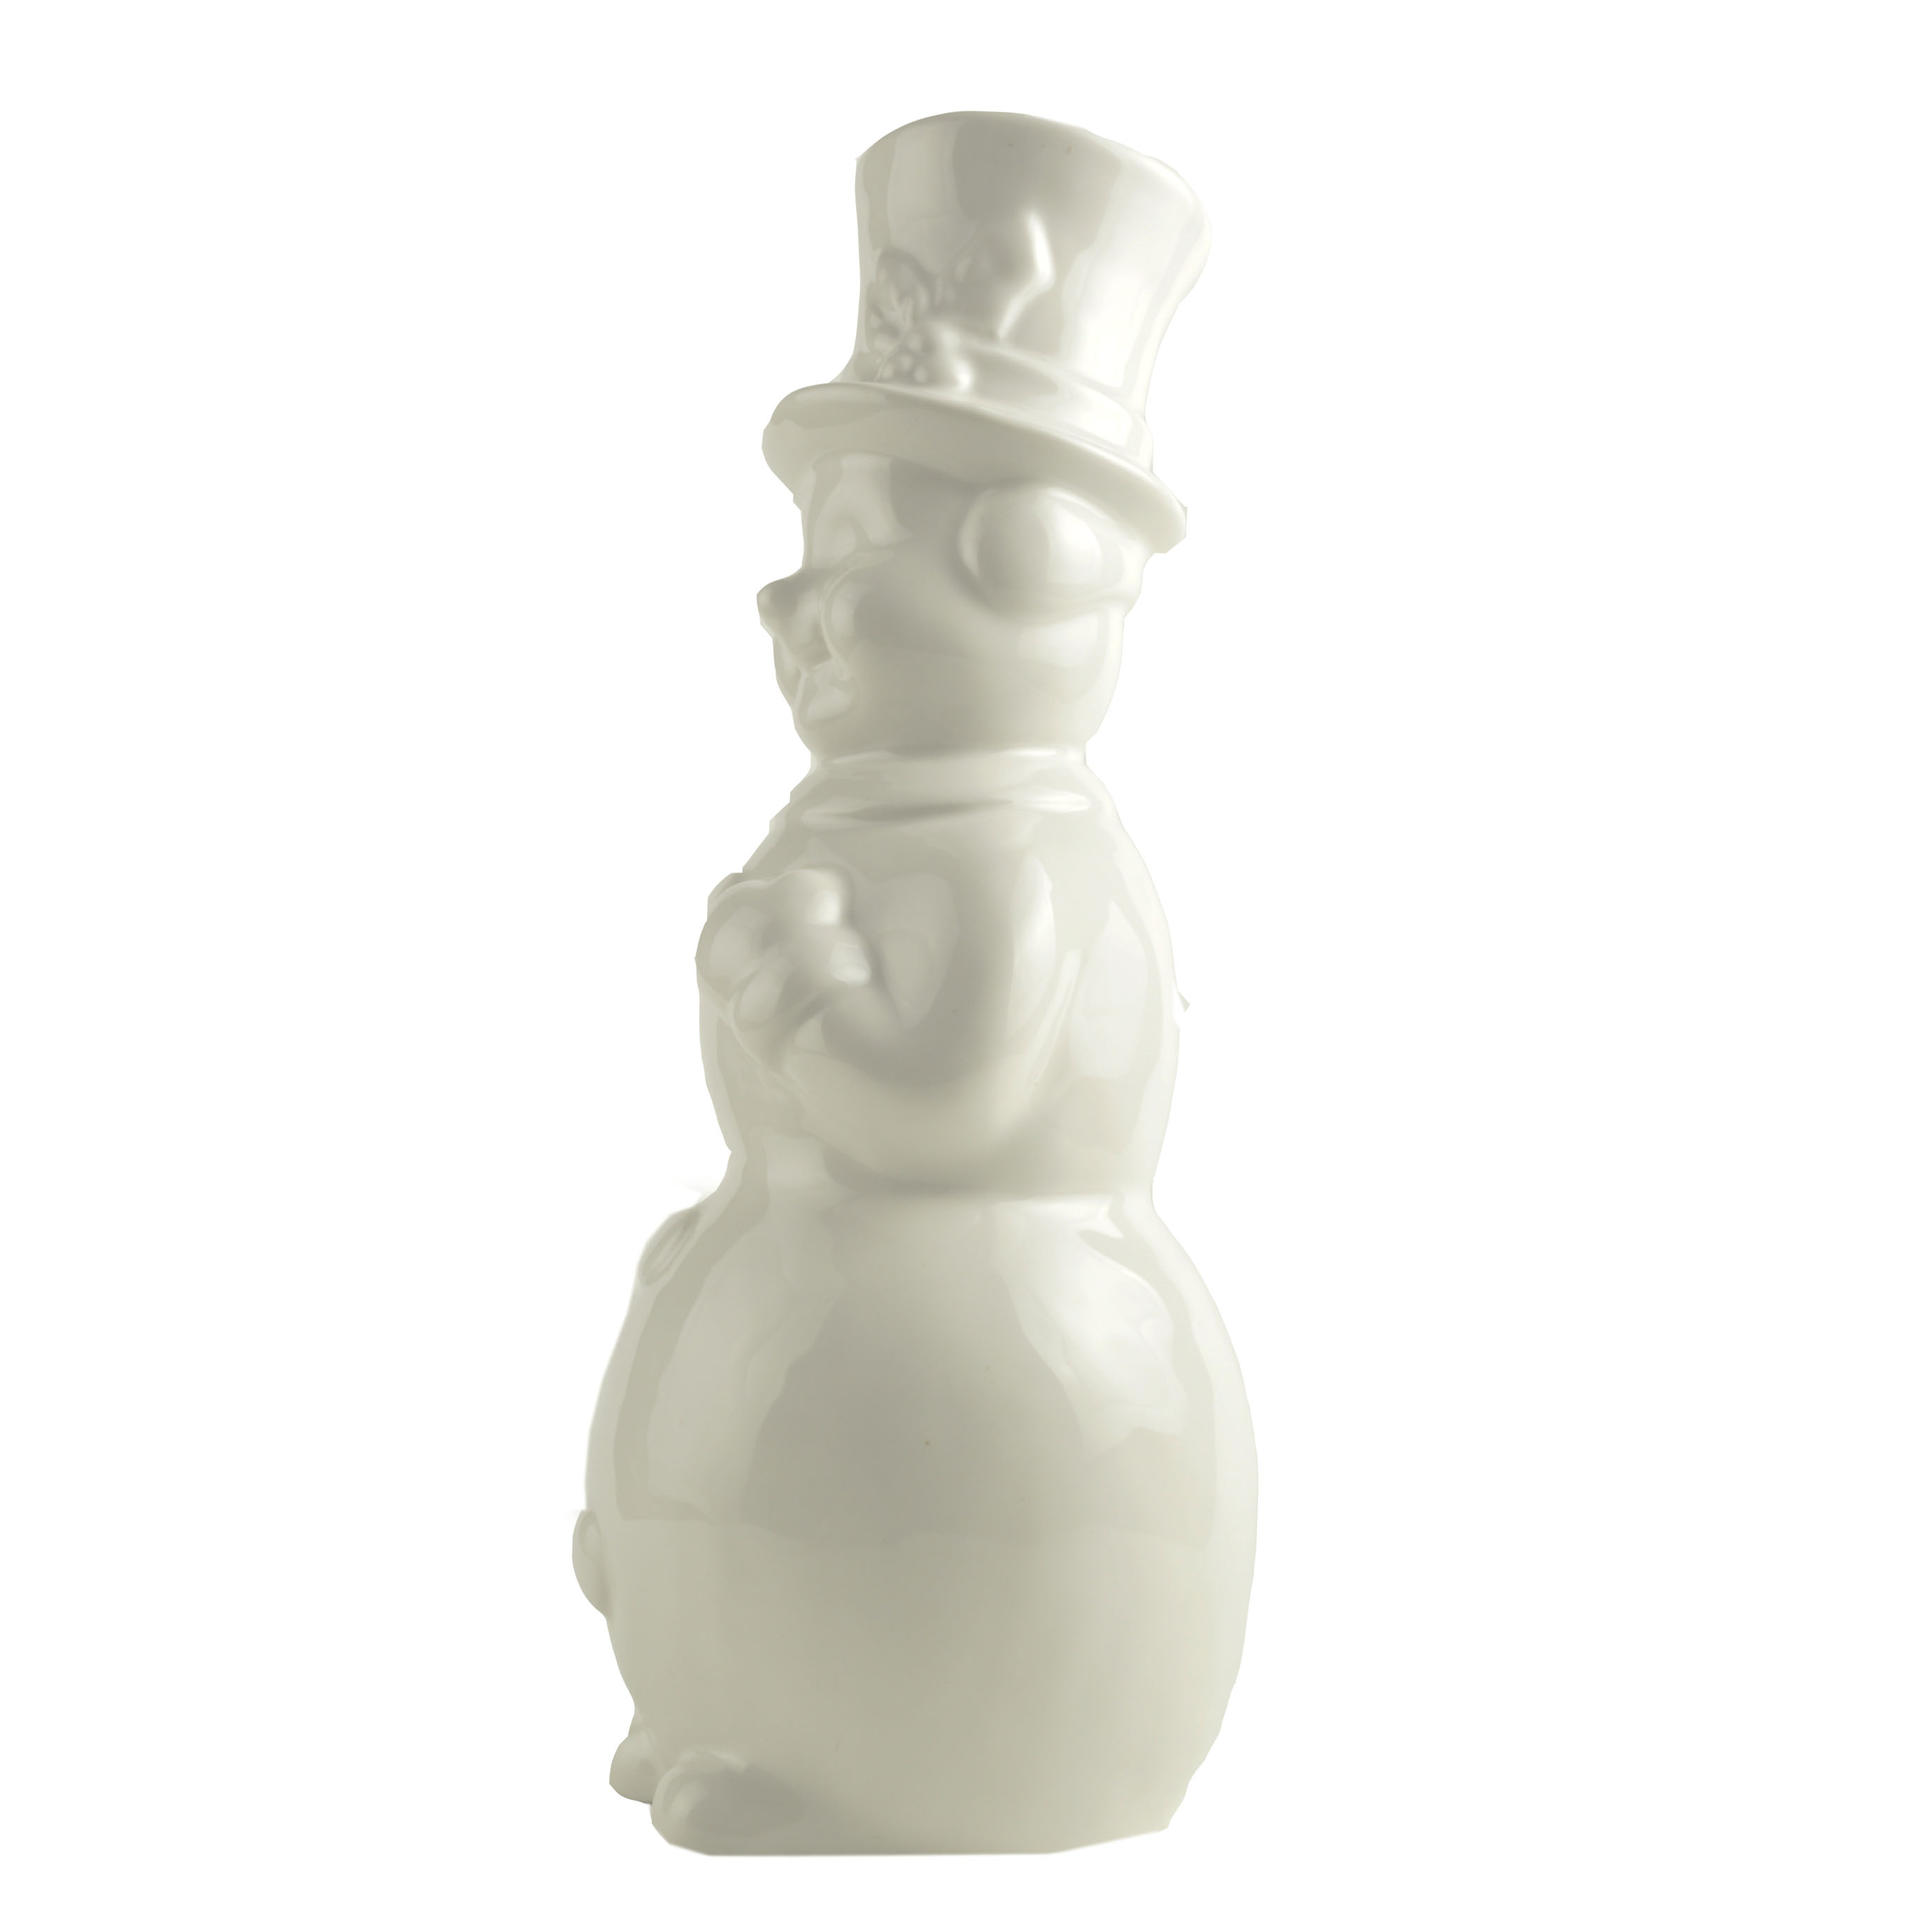 Hot sale New custom design personalized White Ceramic Snowman Decor Christmas home decoration